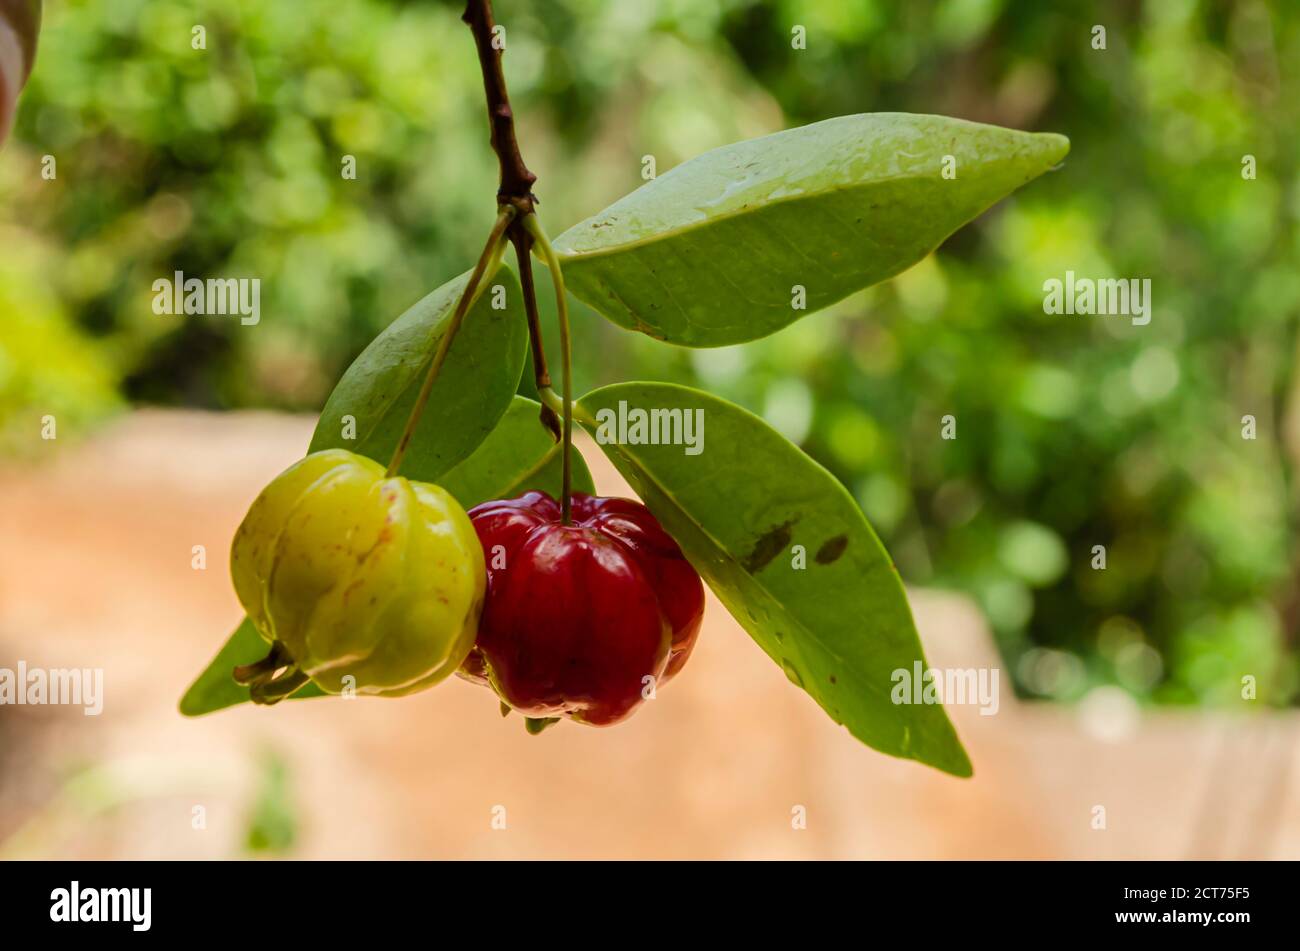 Ripe And Unripe Cherries On Branch Stock Photo